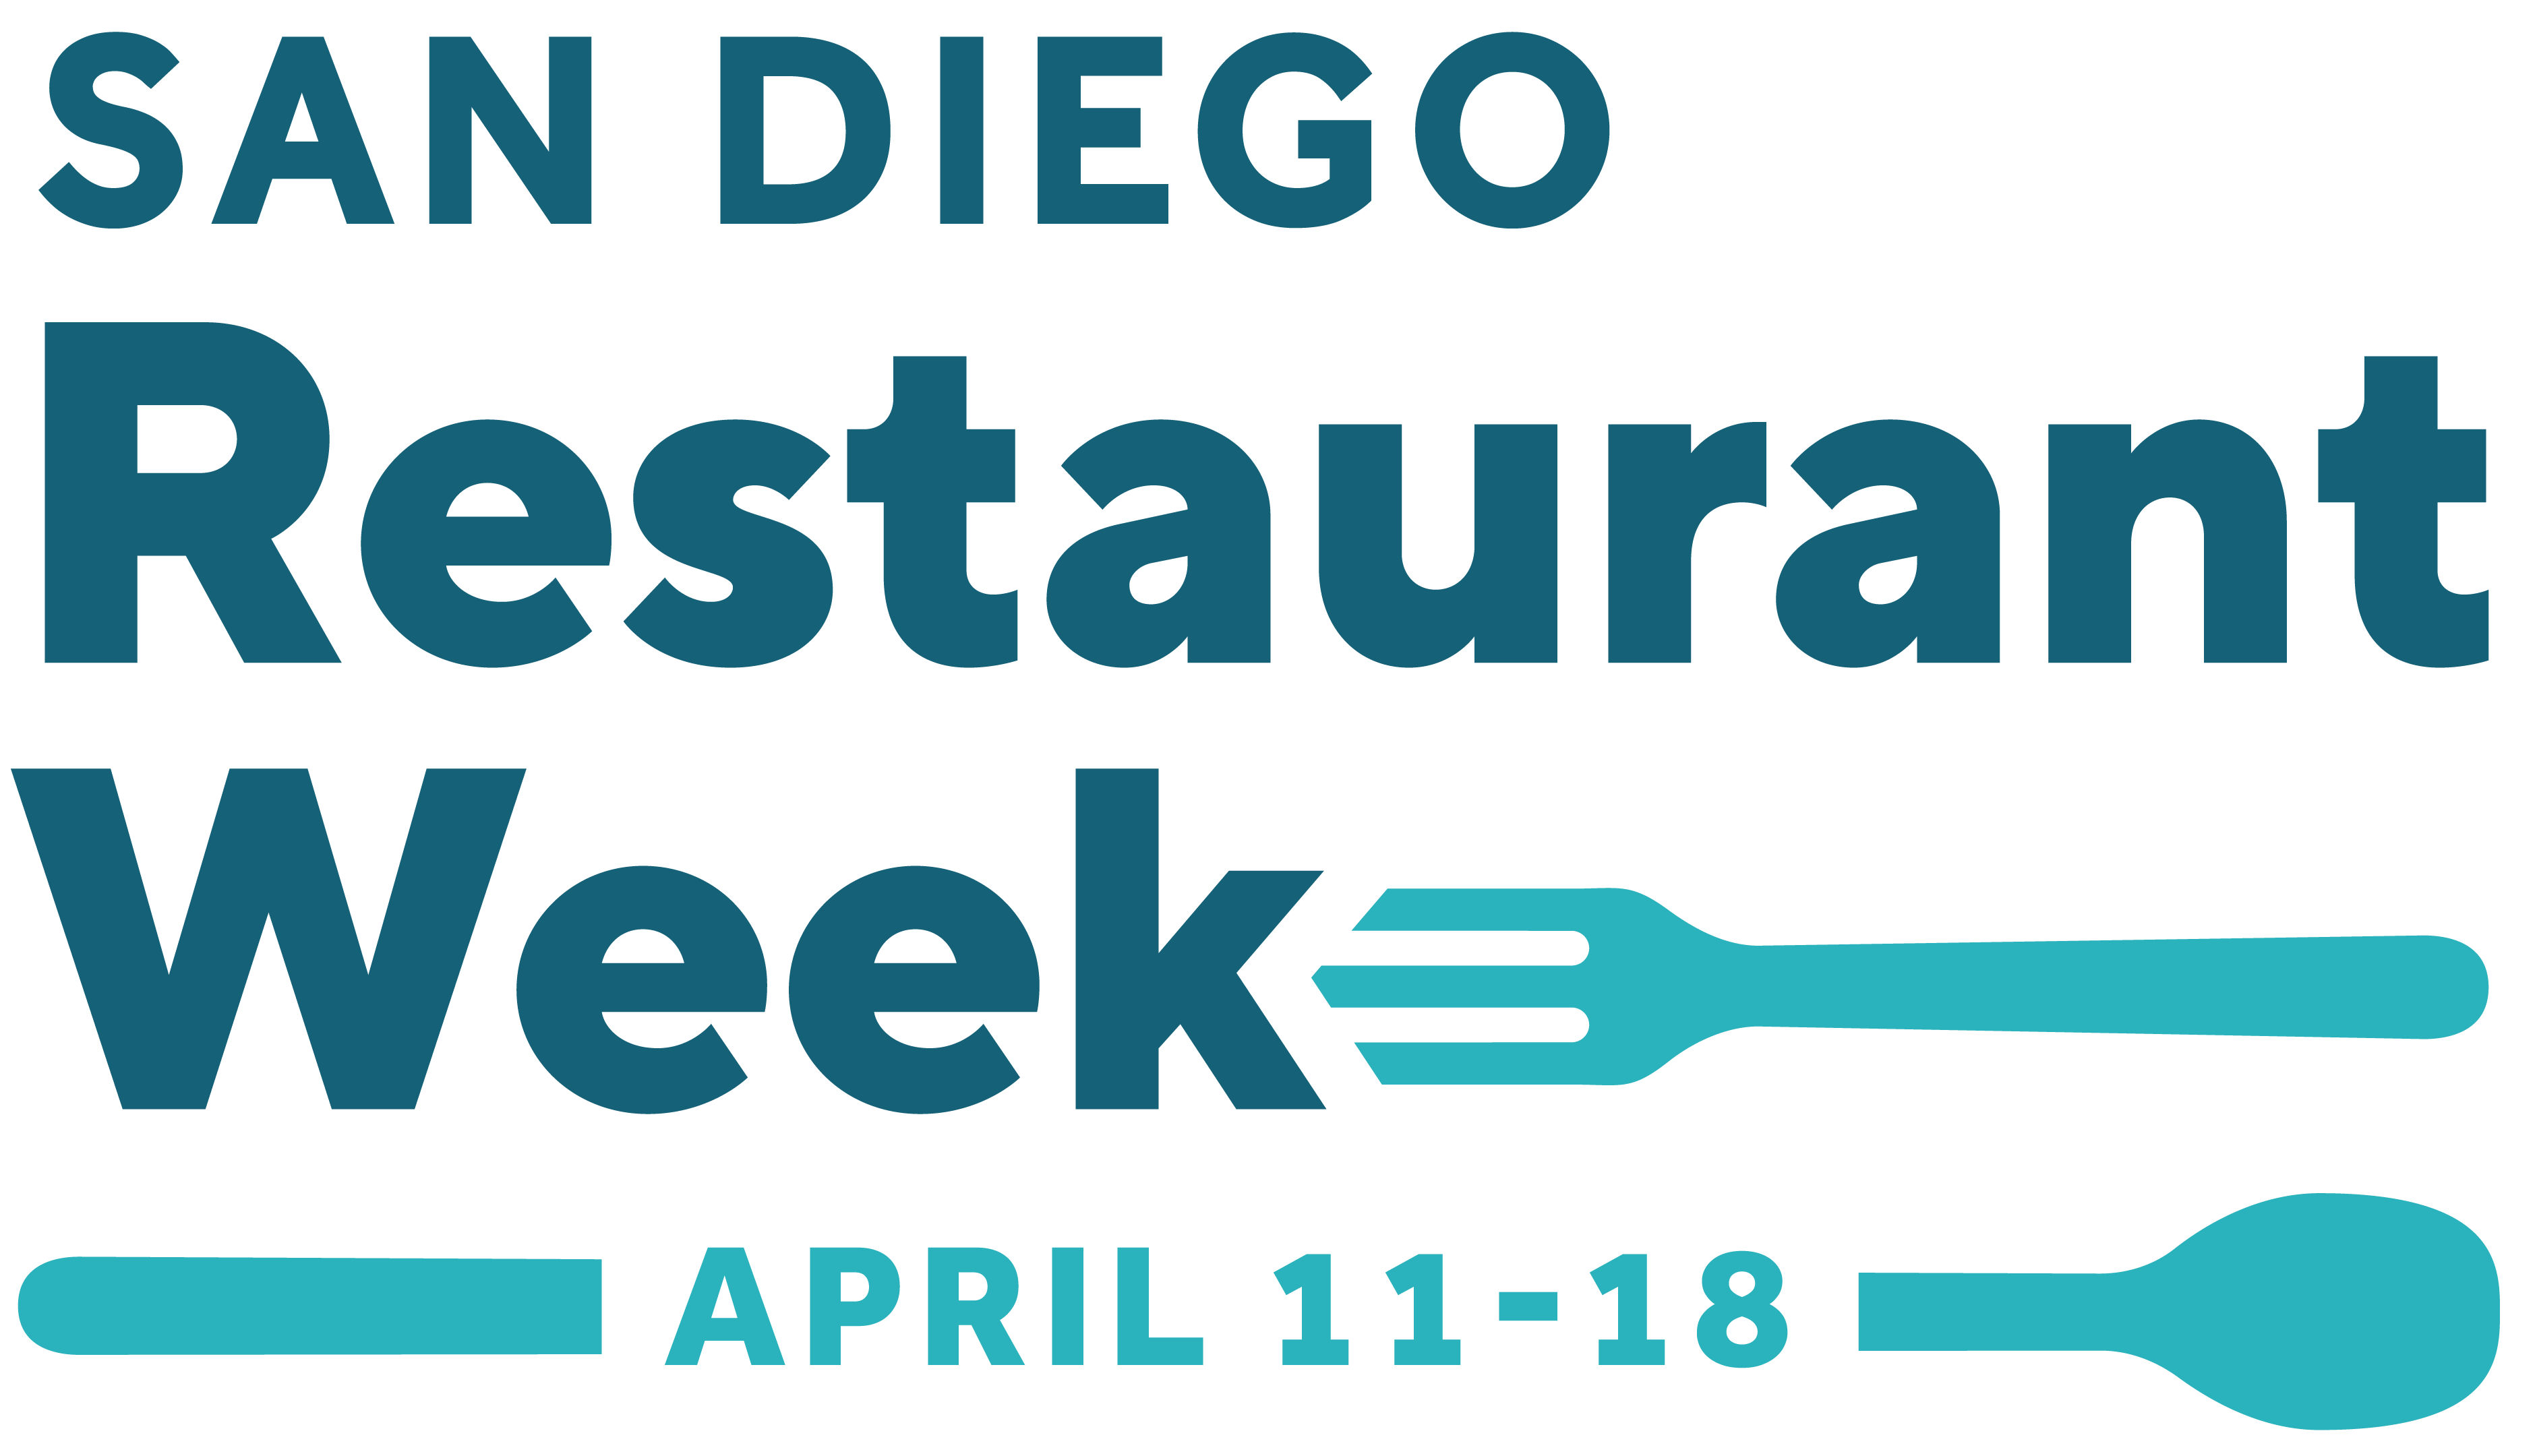 San Diego Restaurant Week Is Almost Here! Let's EAT!